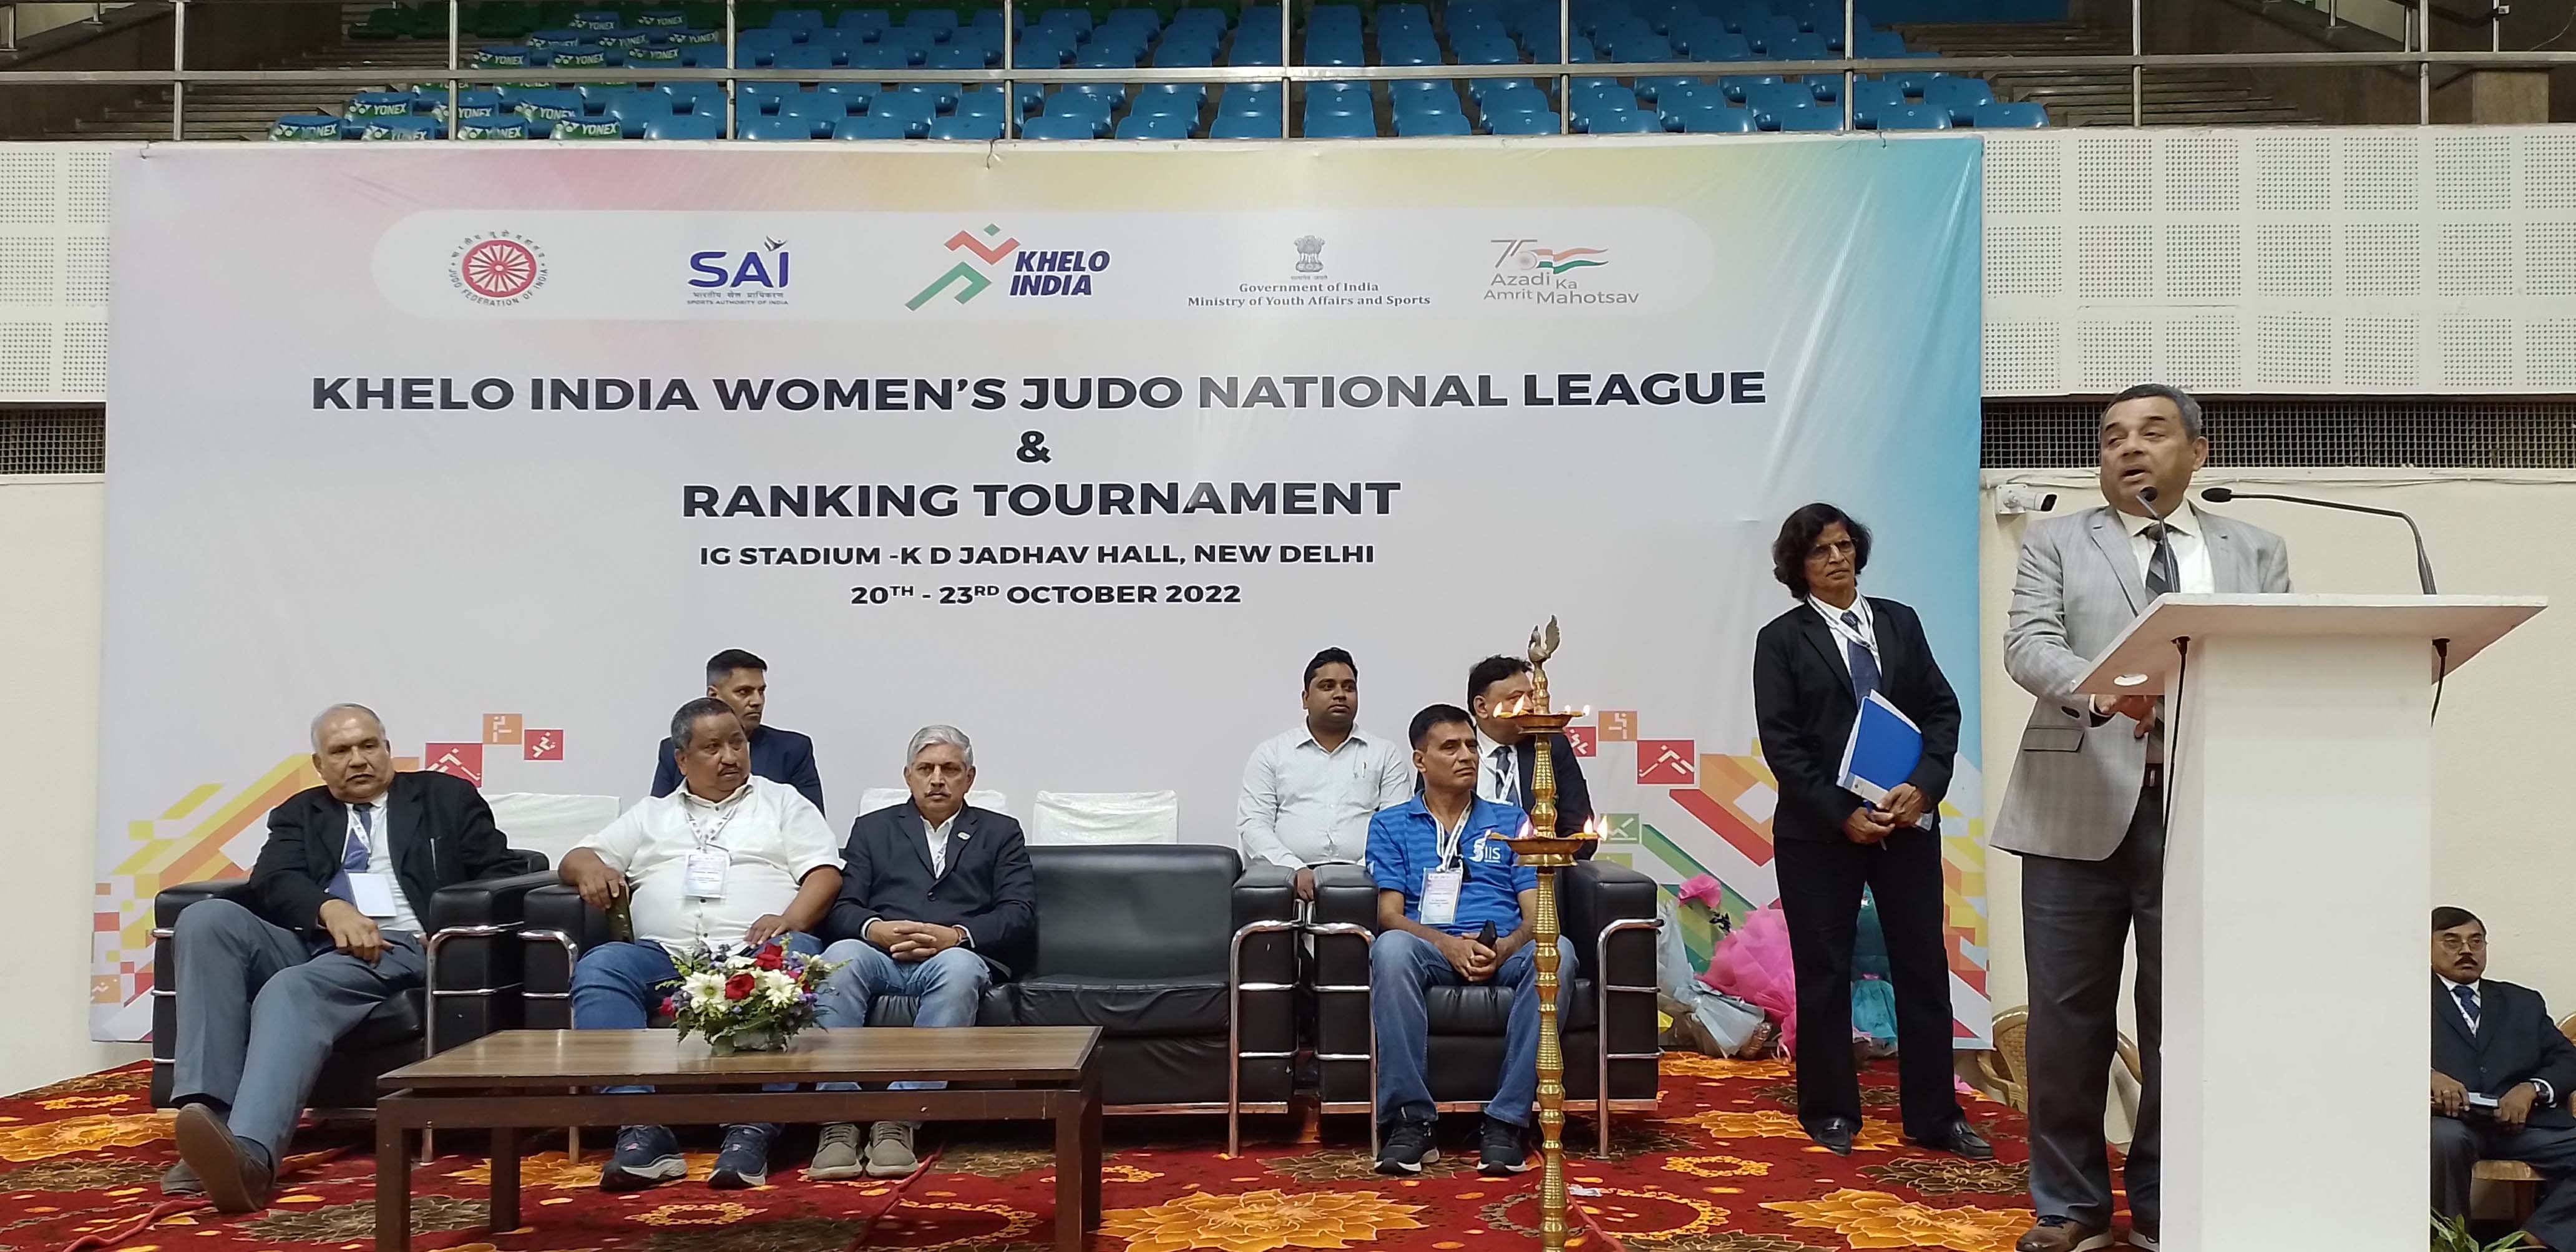 Khelo India Women's Judo National League